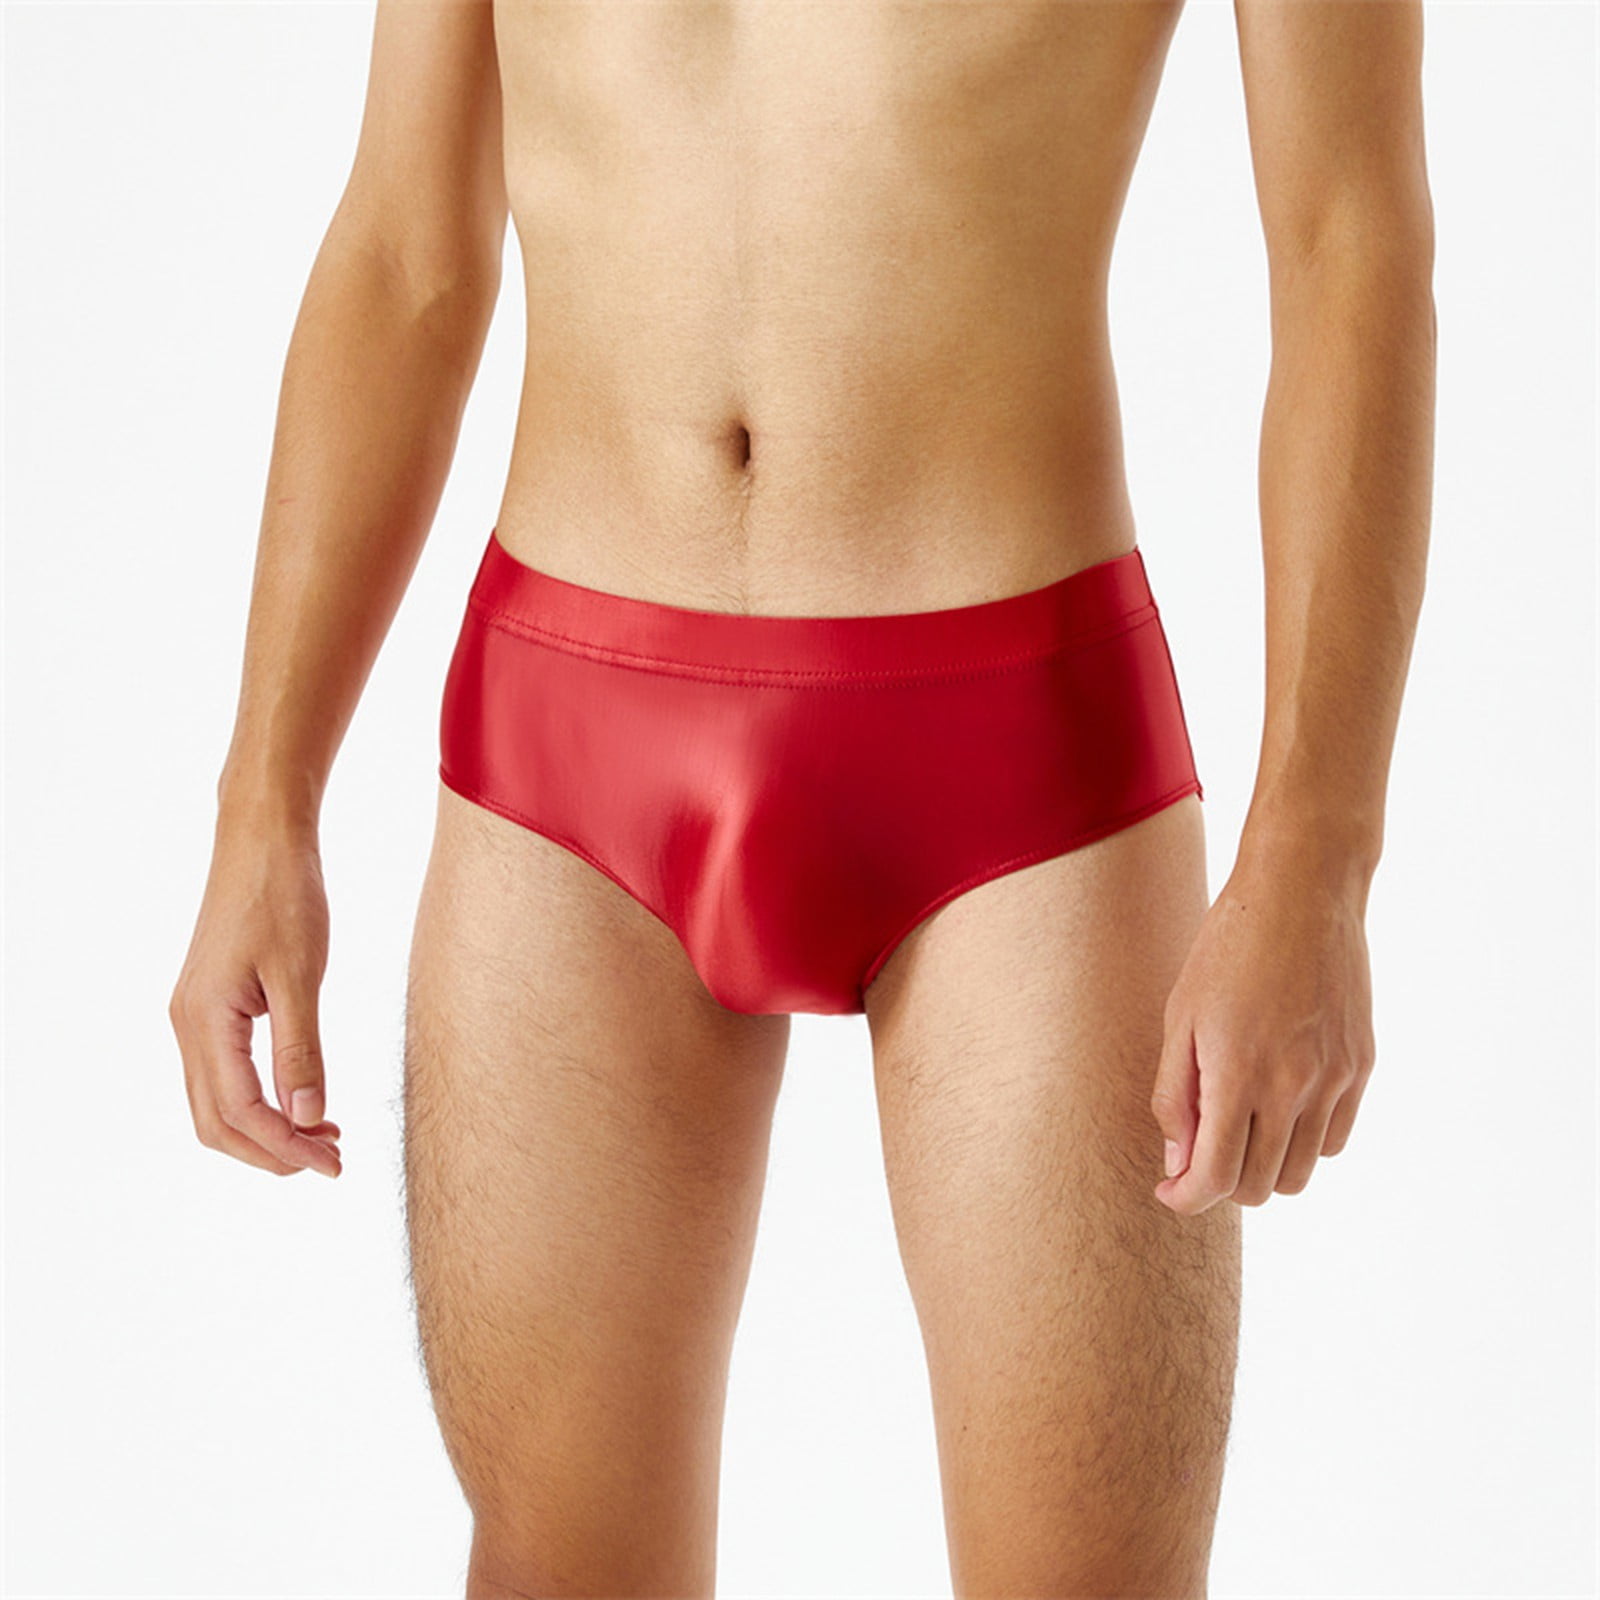 Red Mens Underwear Crotch Seamless Glossy Silky High Elastic Plus Size  Briefs . Nylon 